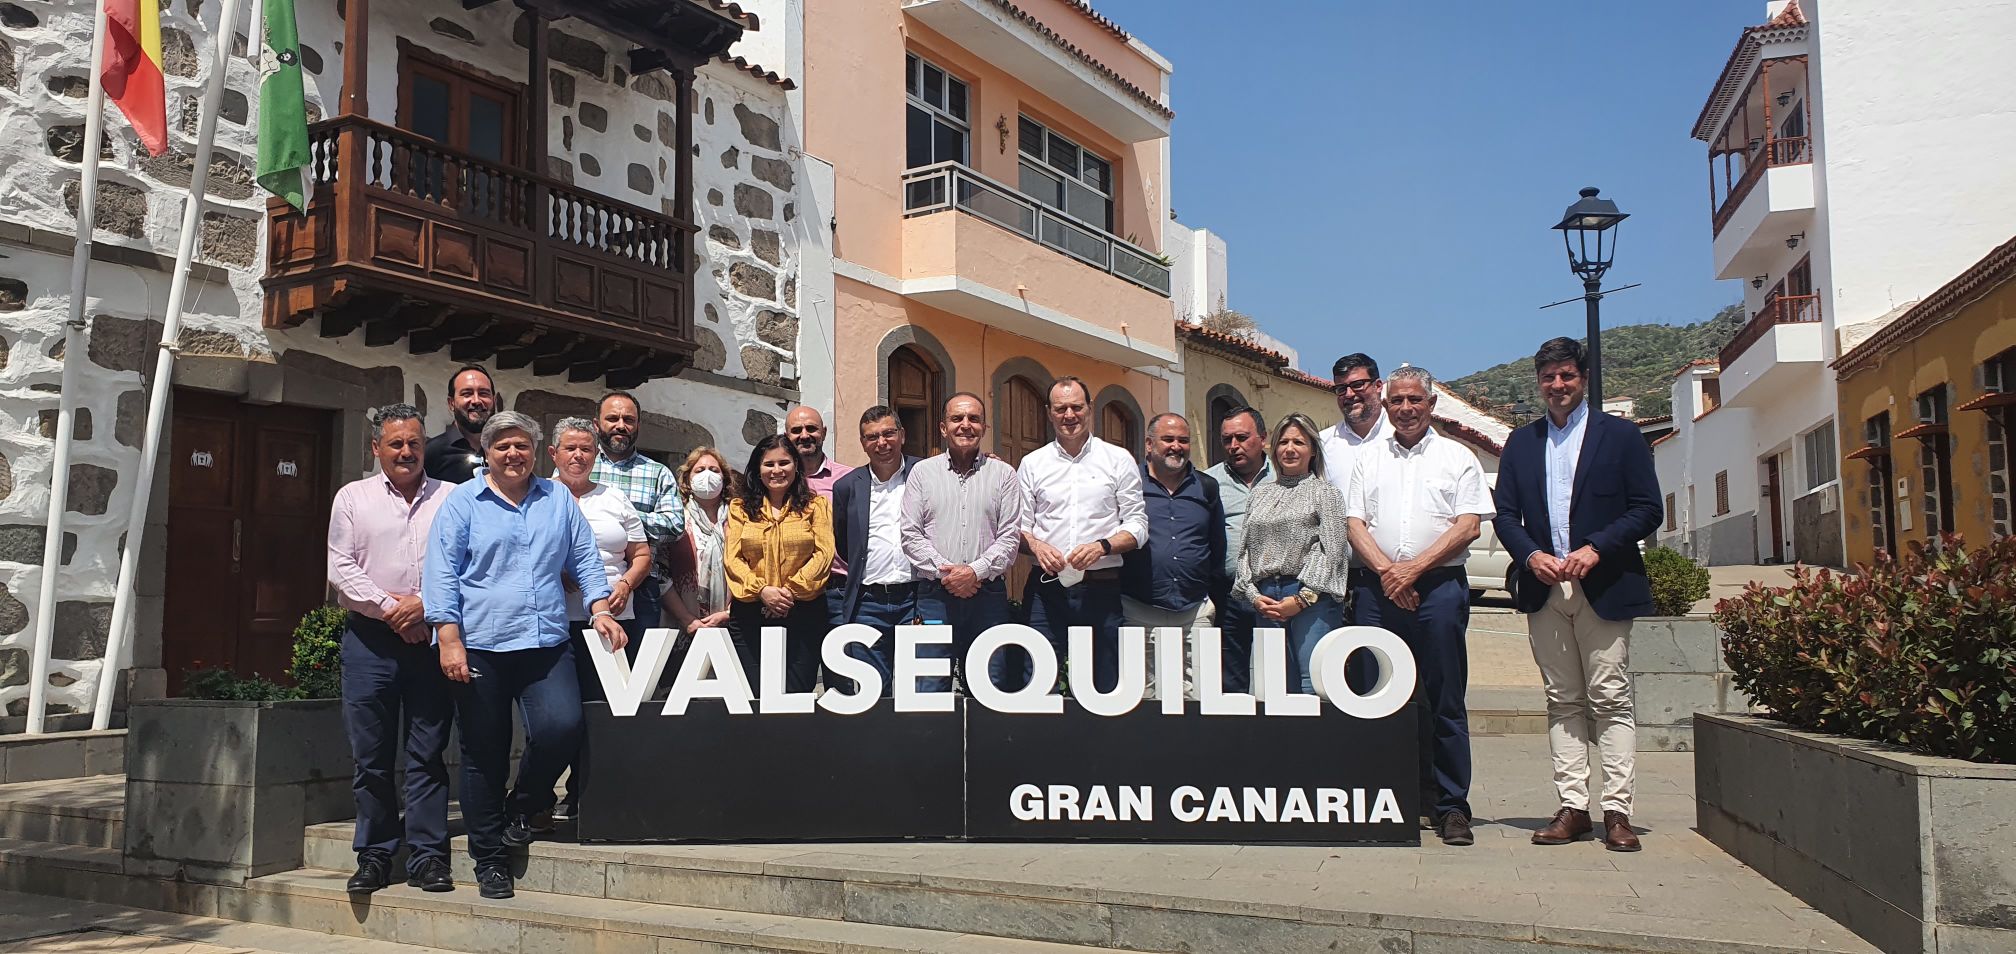 Featured image for “El Comité Ejecutivo de la FECAM se reúne por primera vez en Valsequillo”